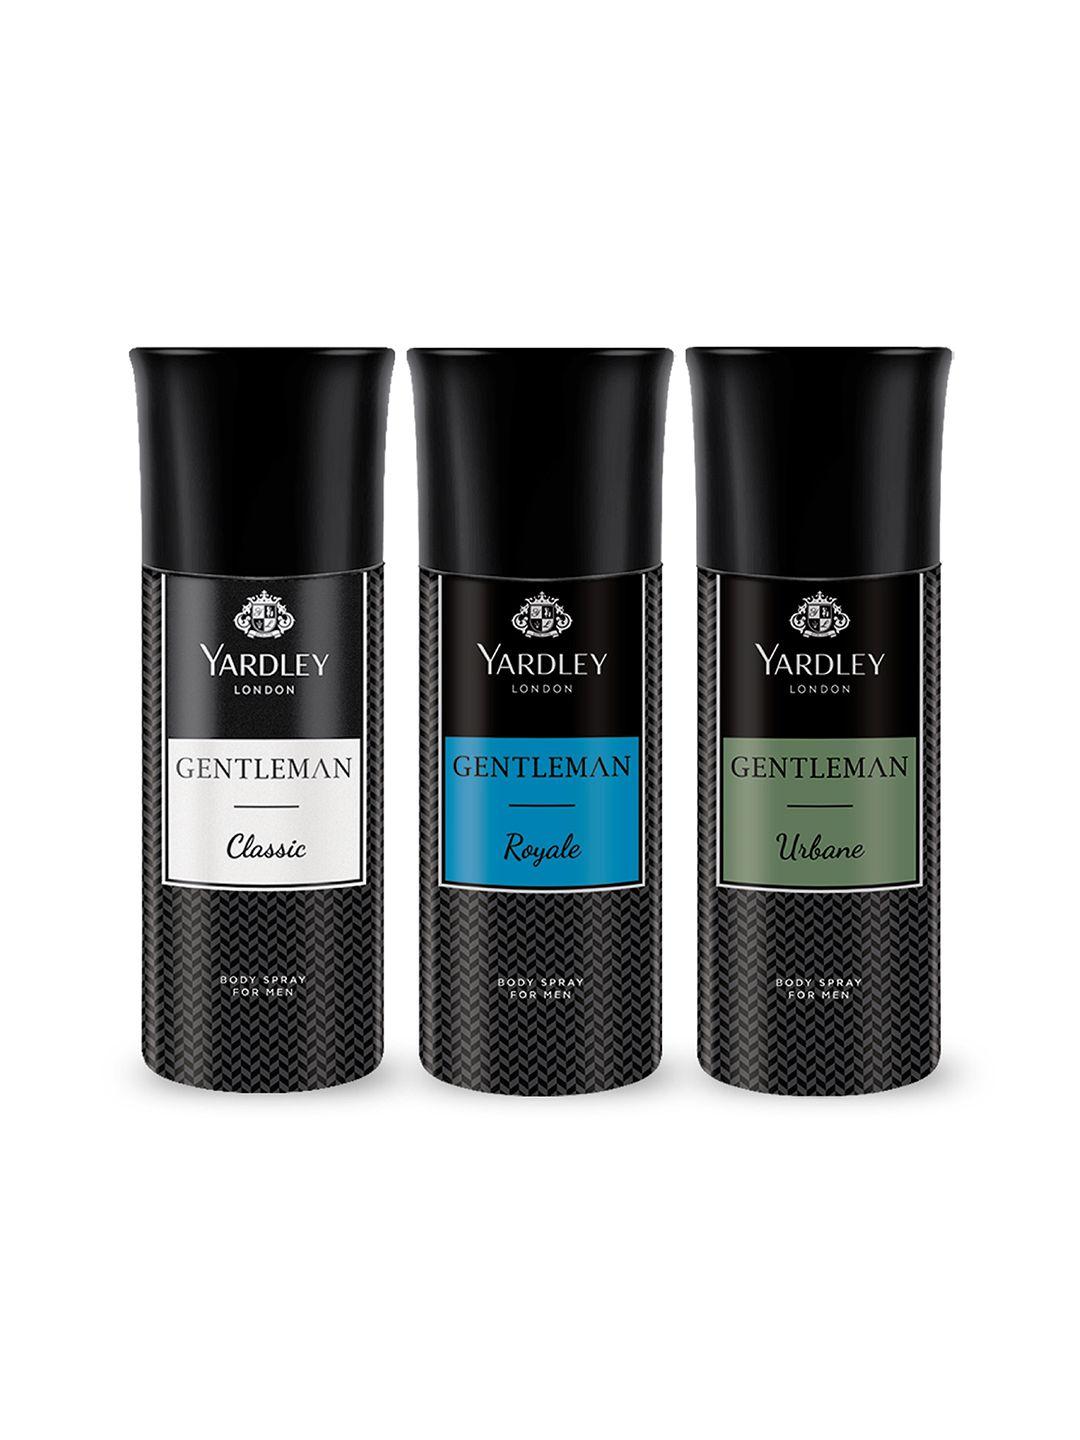 yardley-london-gentleman-set-of-classic-royale--urbane-body-spray---150-ml-each